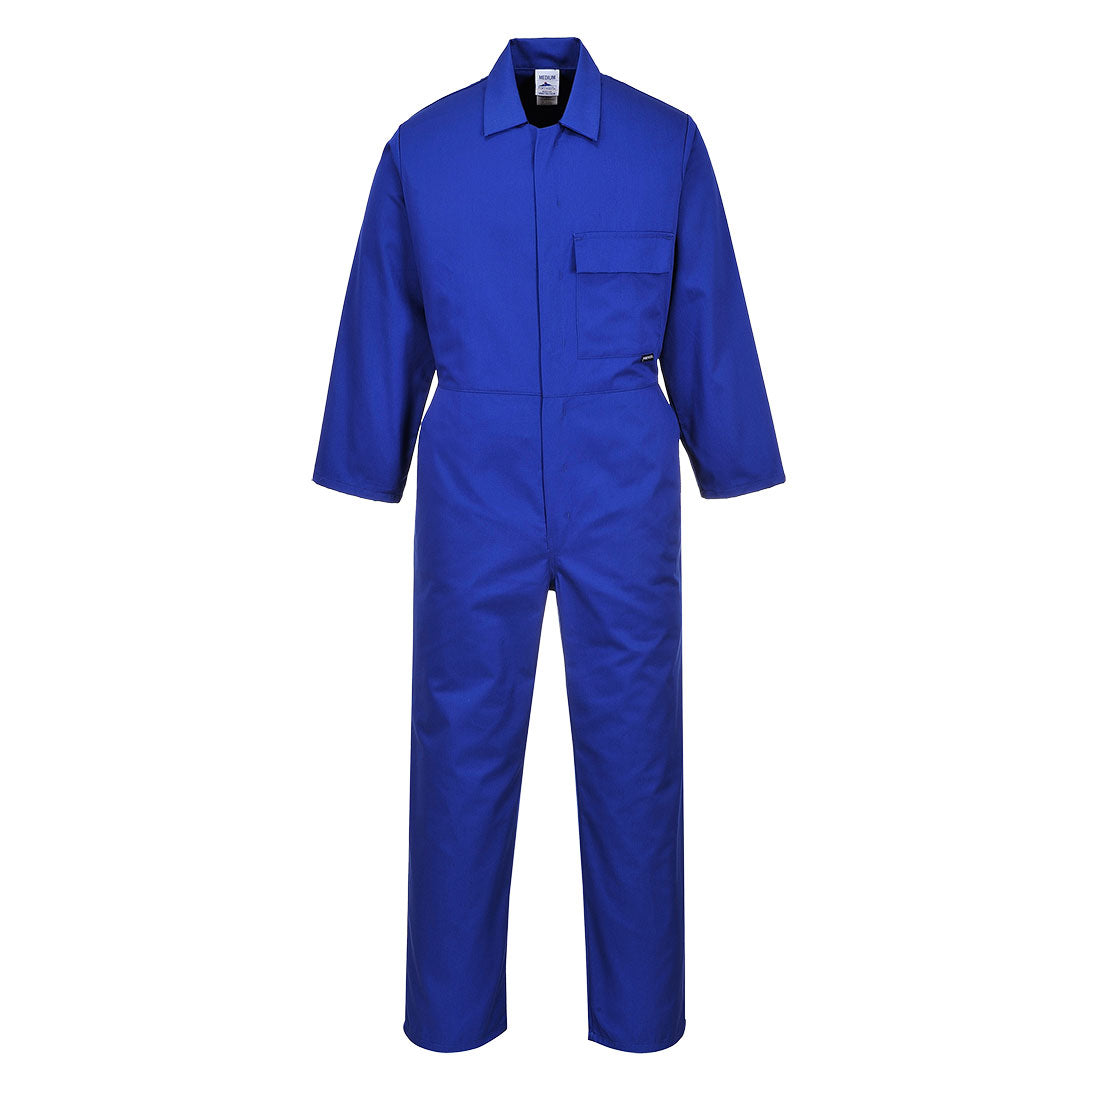 Portwest 2802 - Royal Blue Standard Coverall boiler suit sz Large Regular